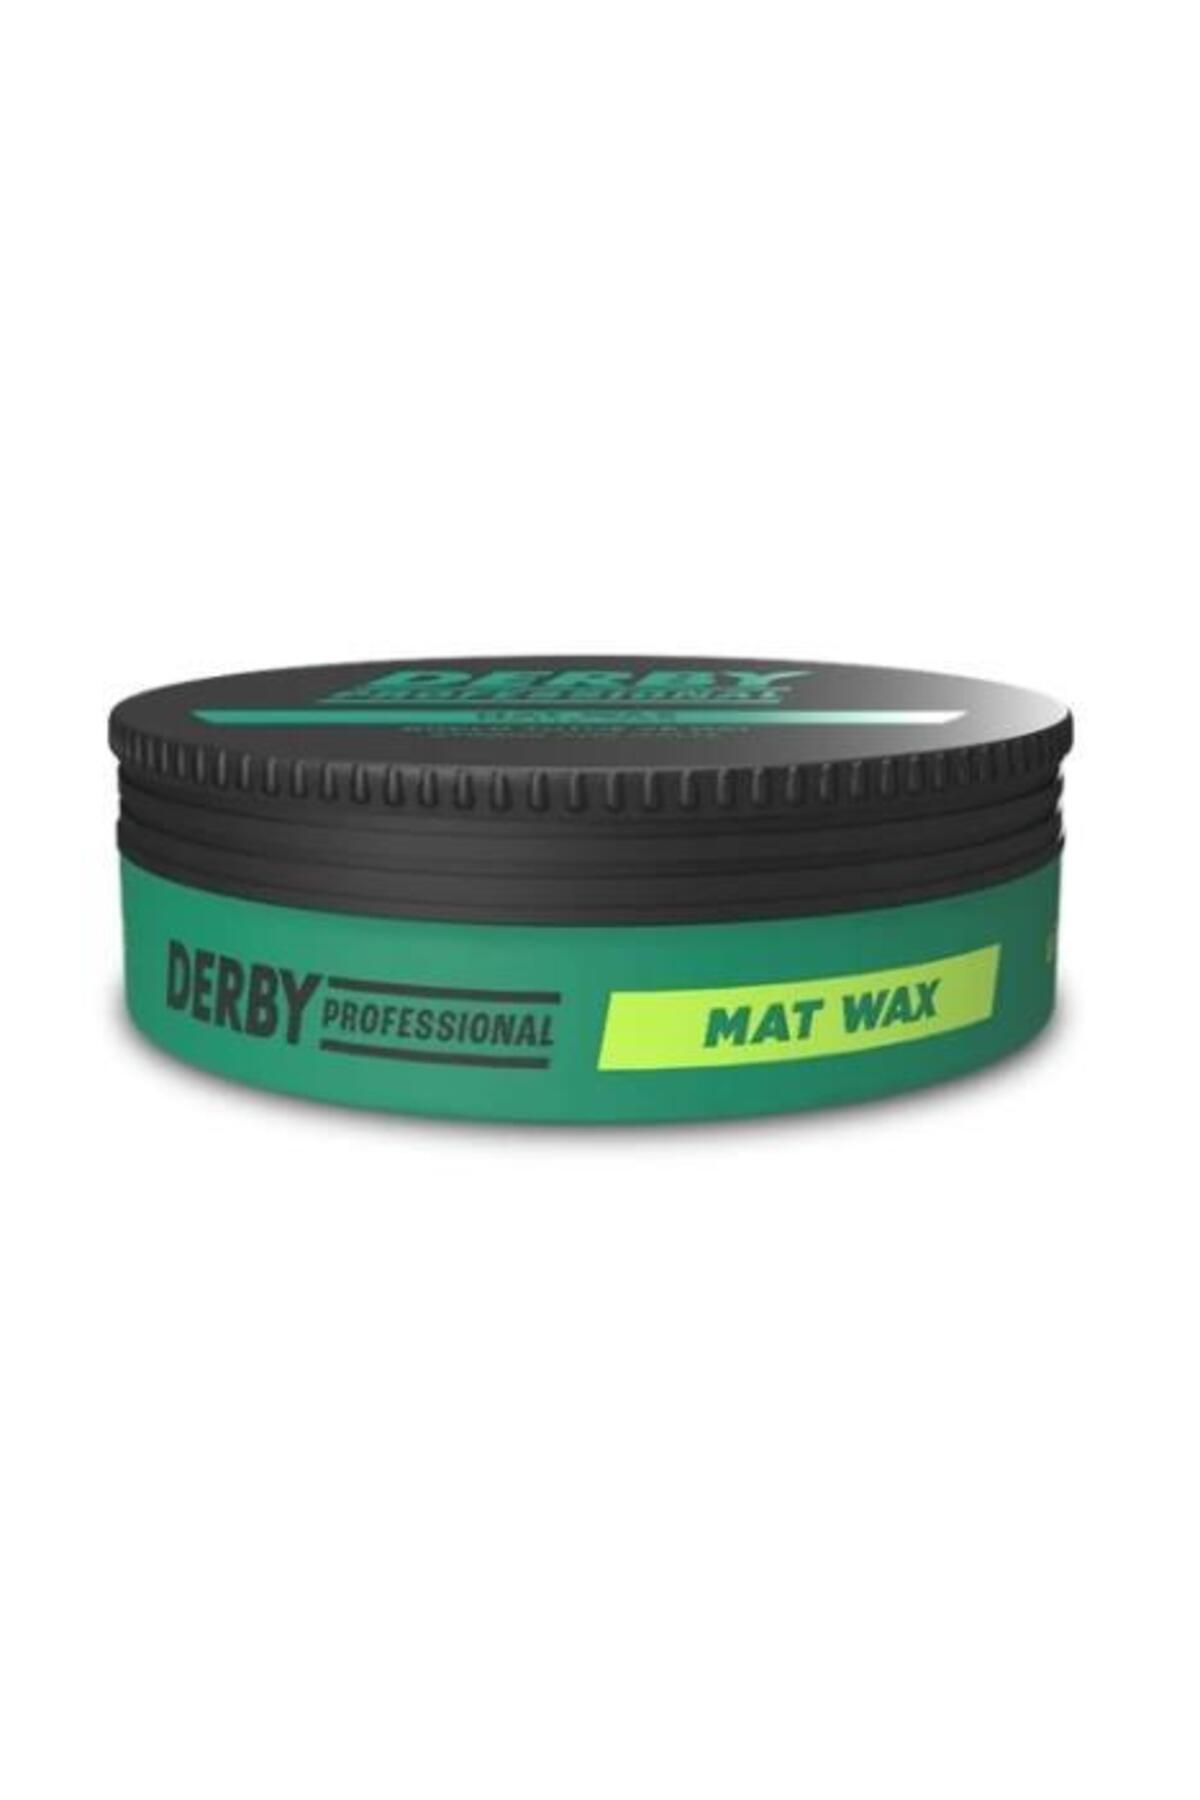 Derby Professional Mat Wax Güçlü Tutuş 150ml